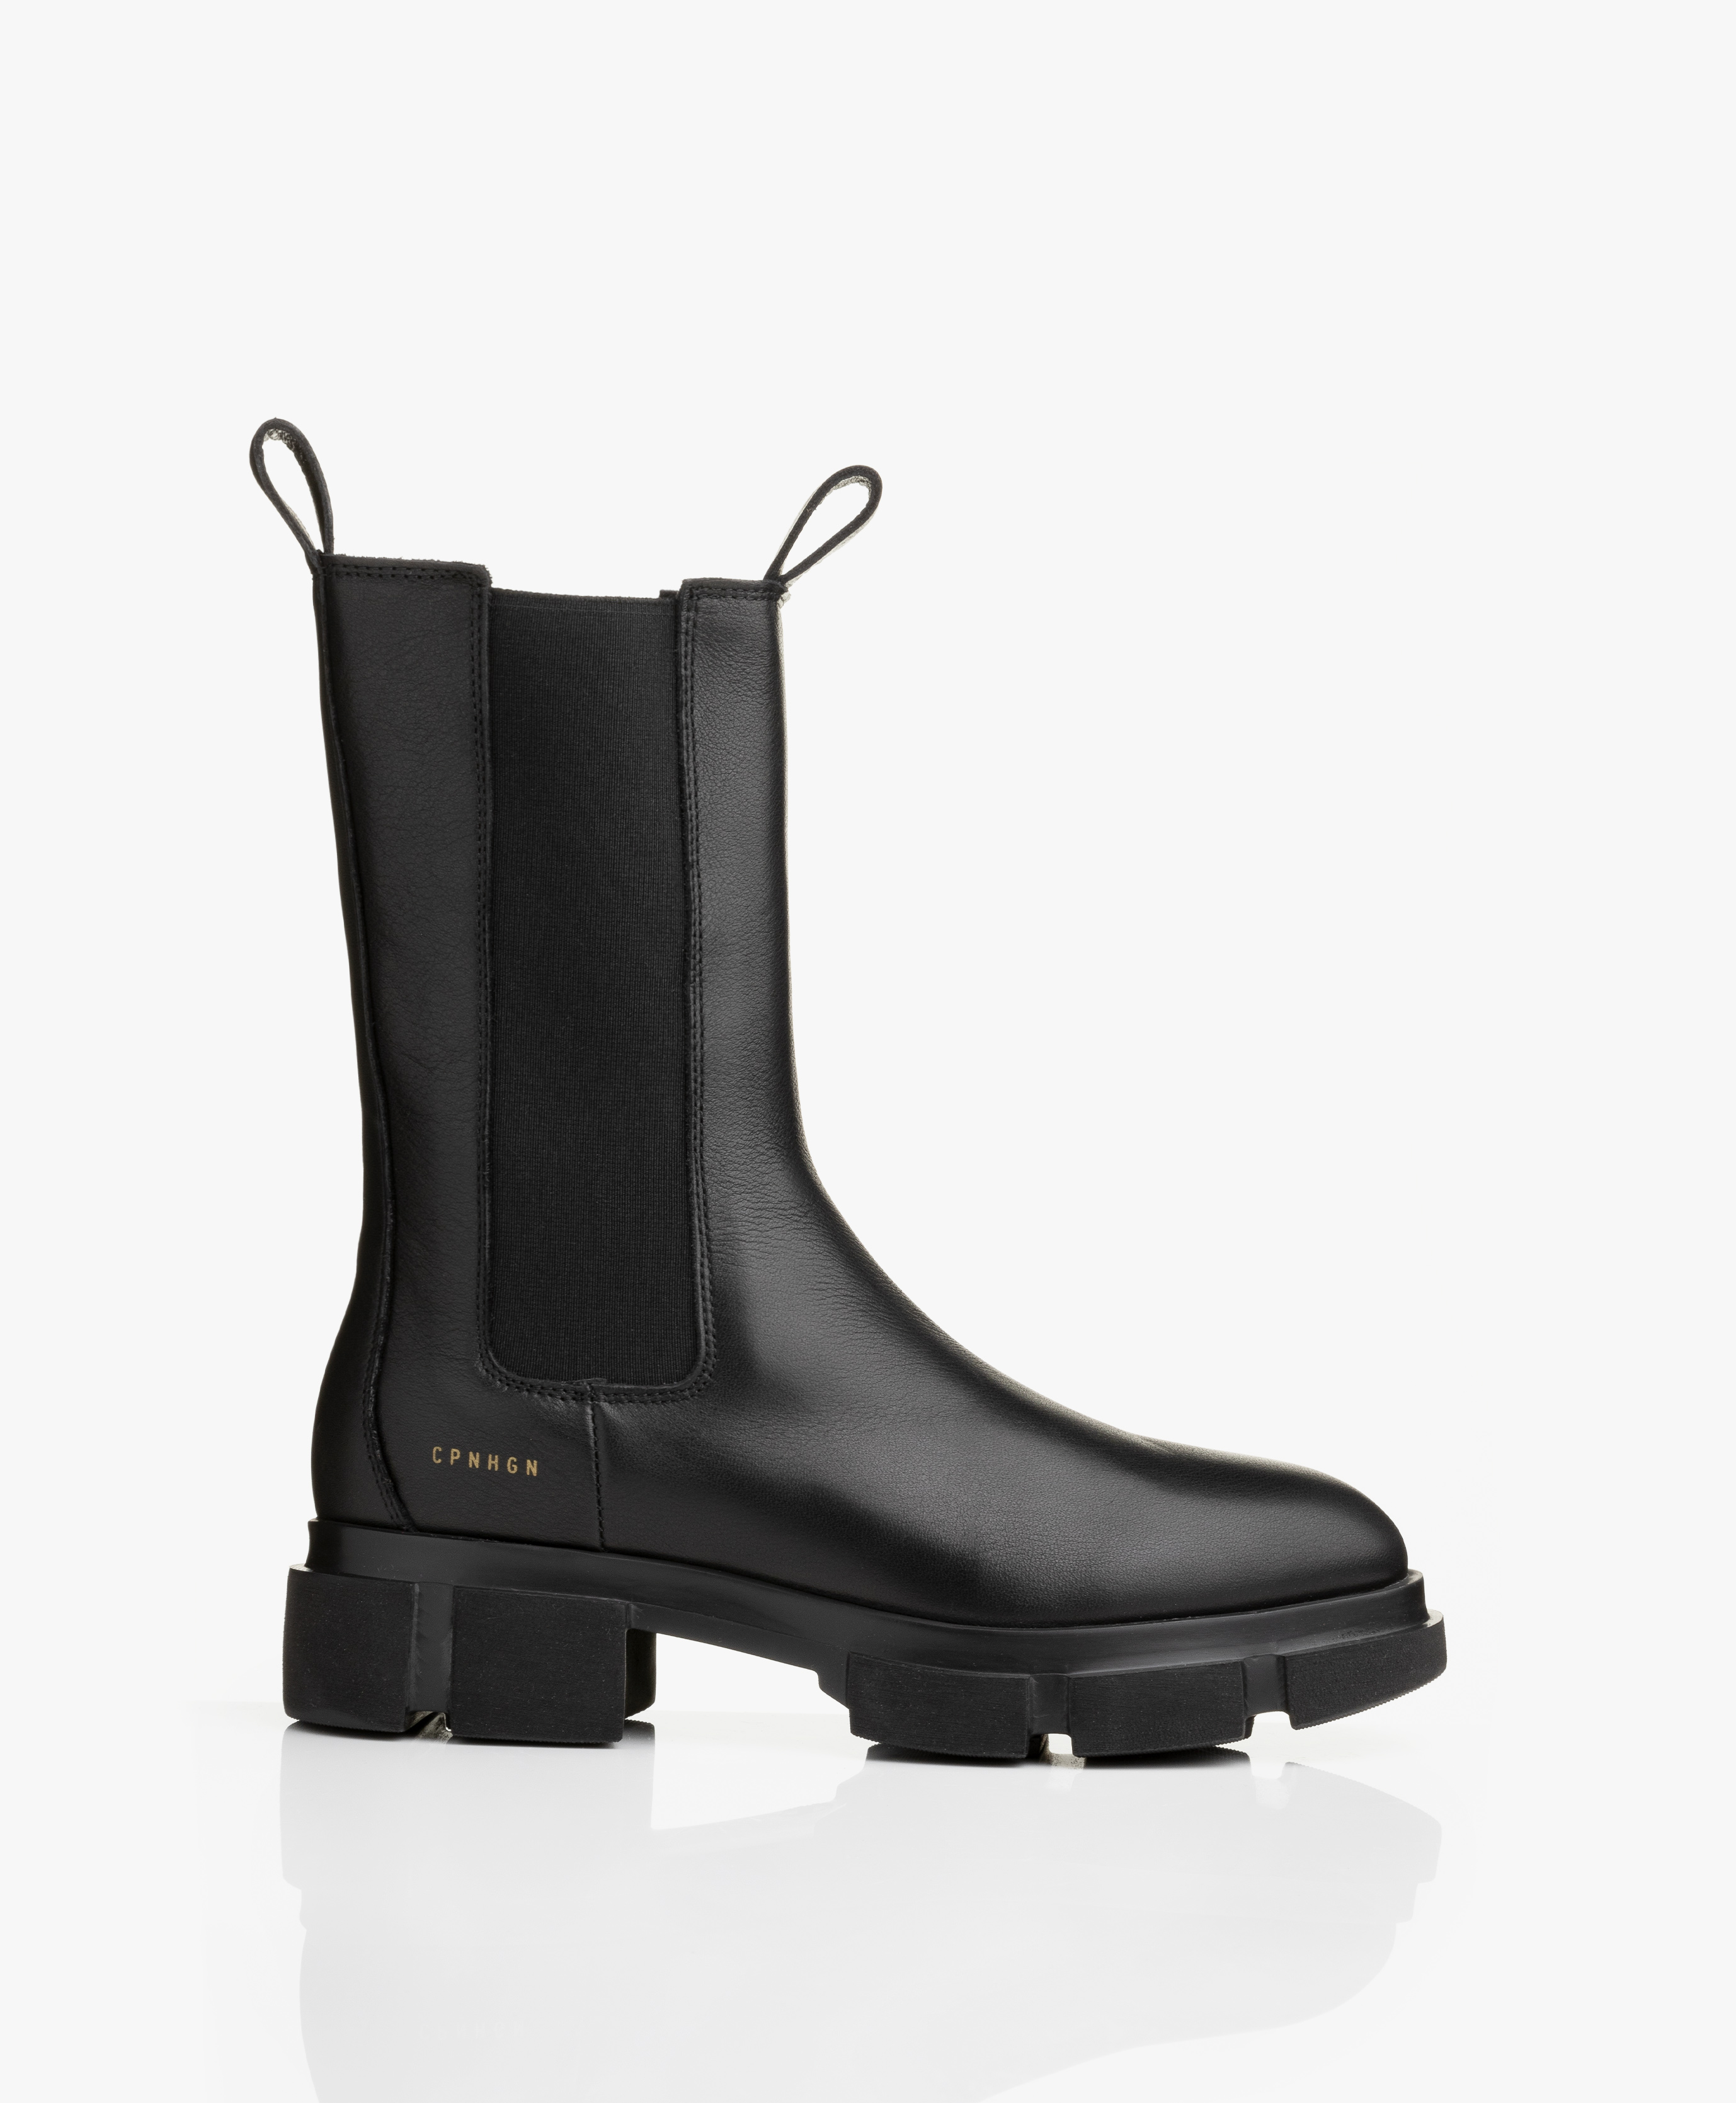 chelsea boots black